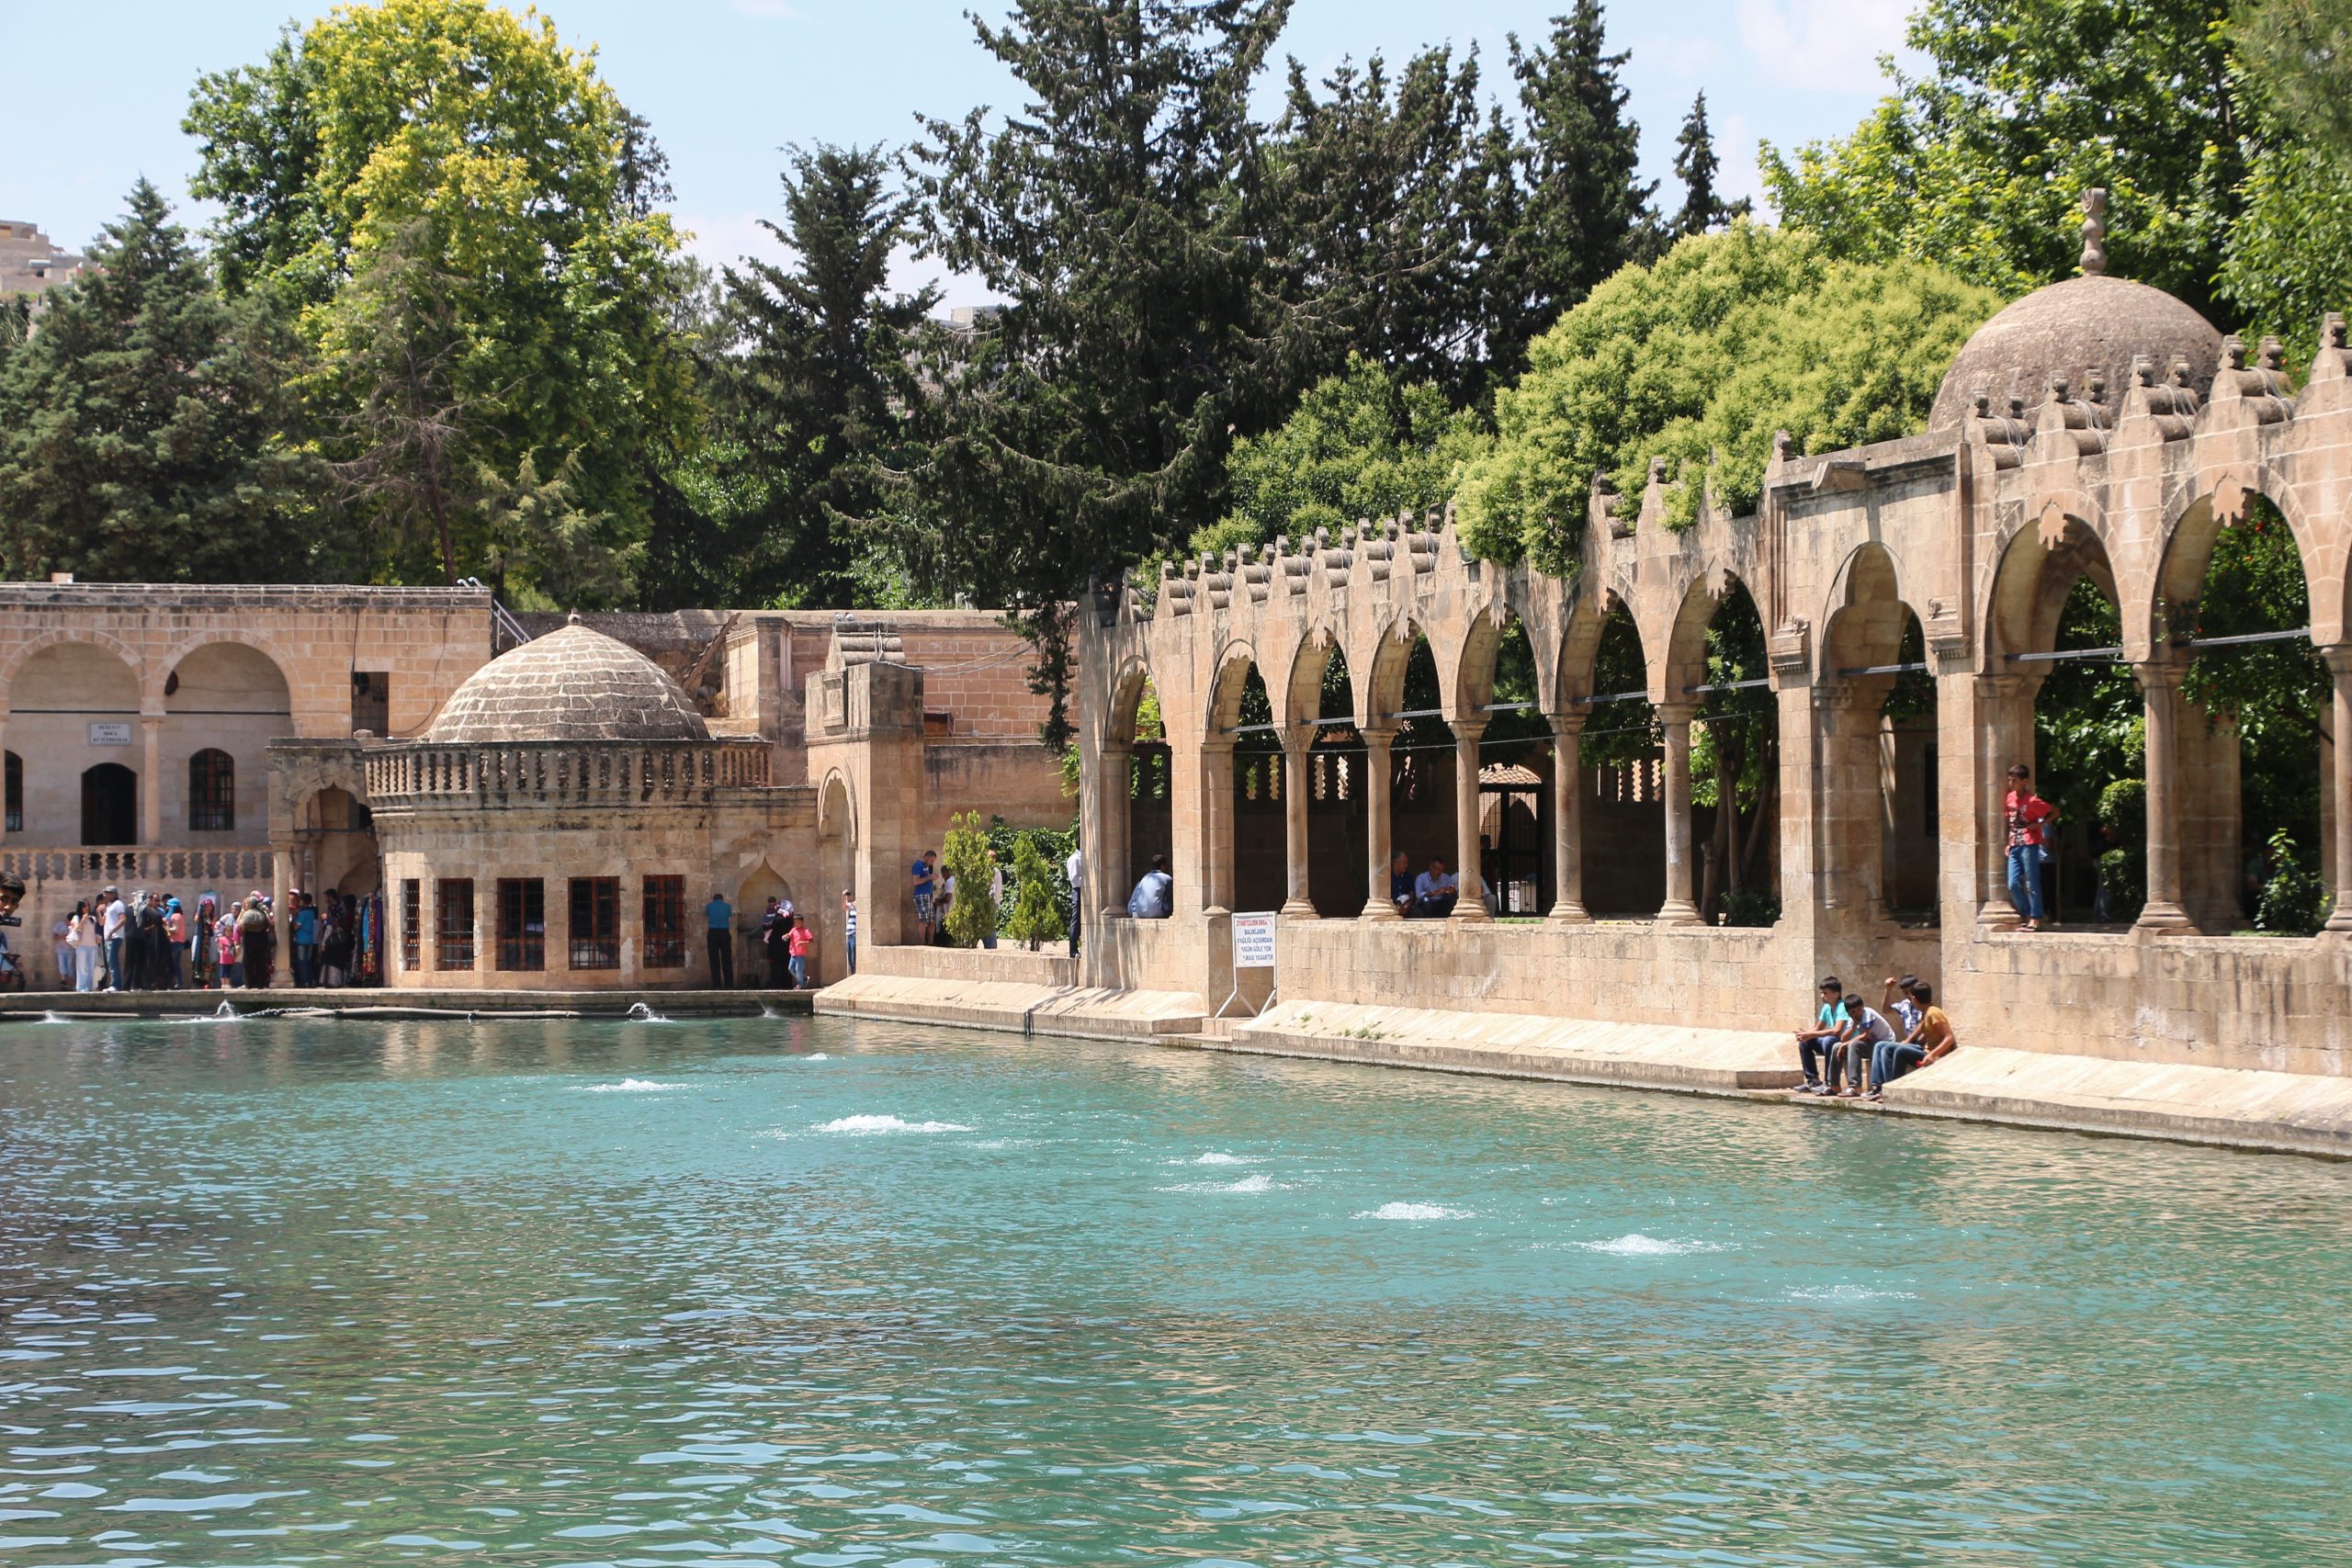 Balikli Göl (Abraham’s Pool) at the site of ancient Edessa, now Urfa, Turkey